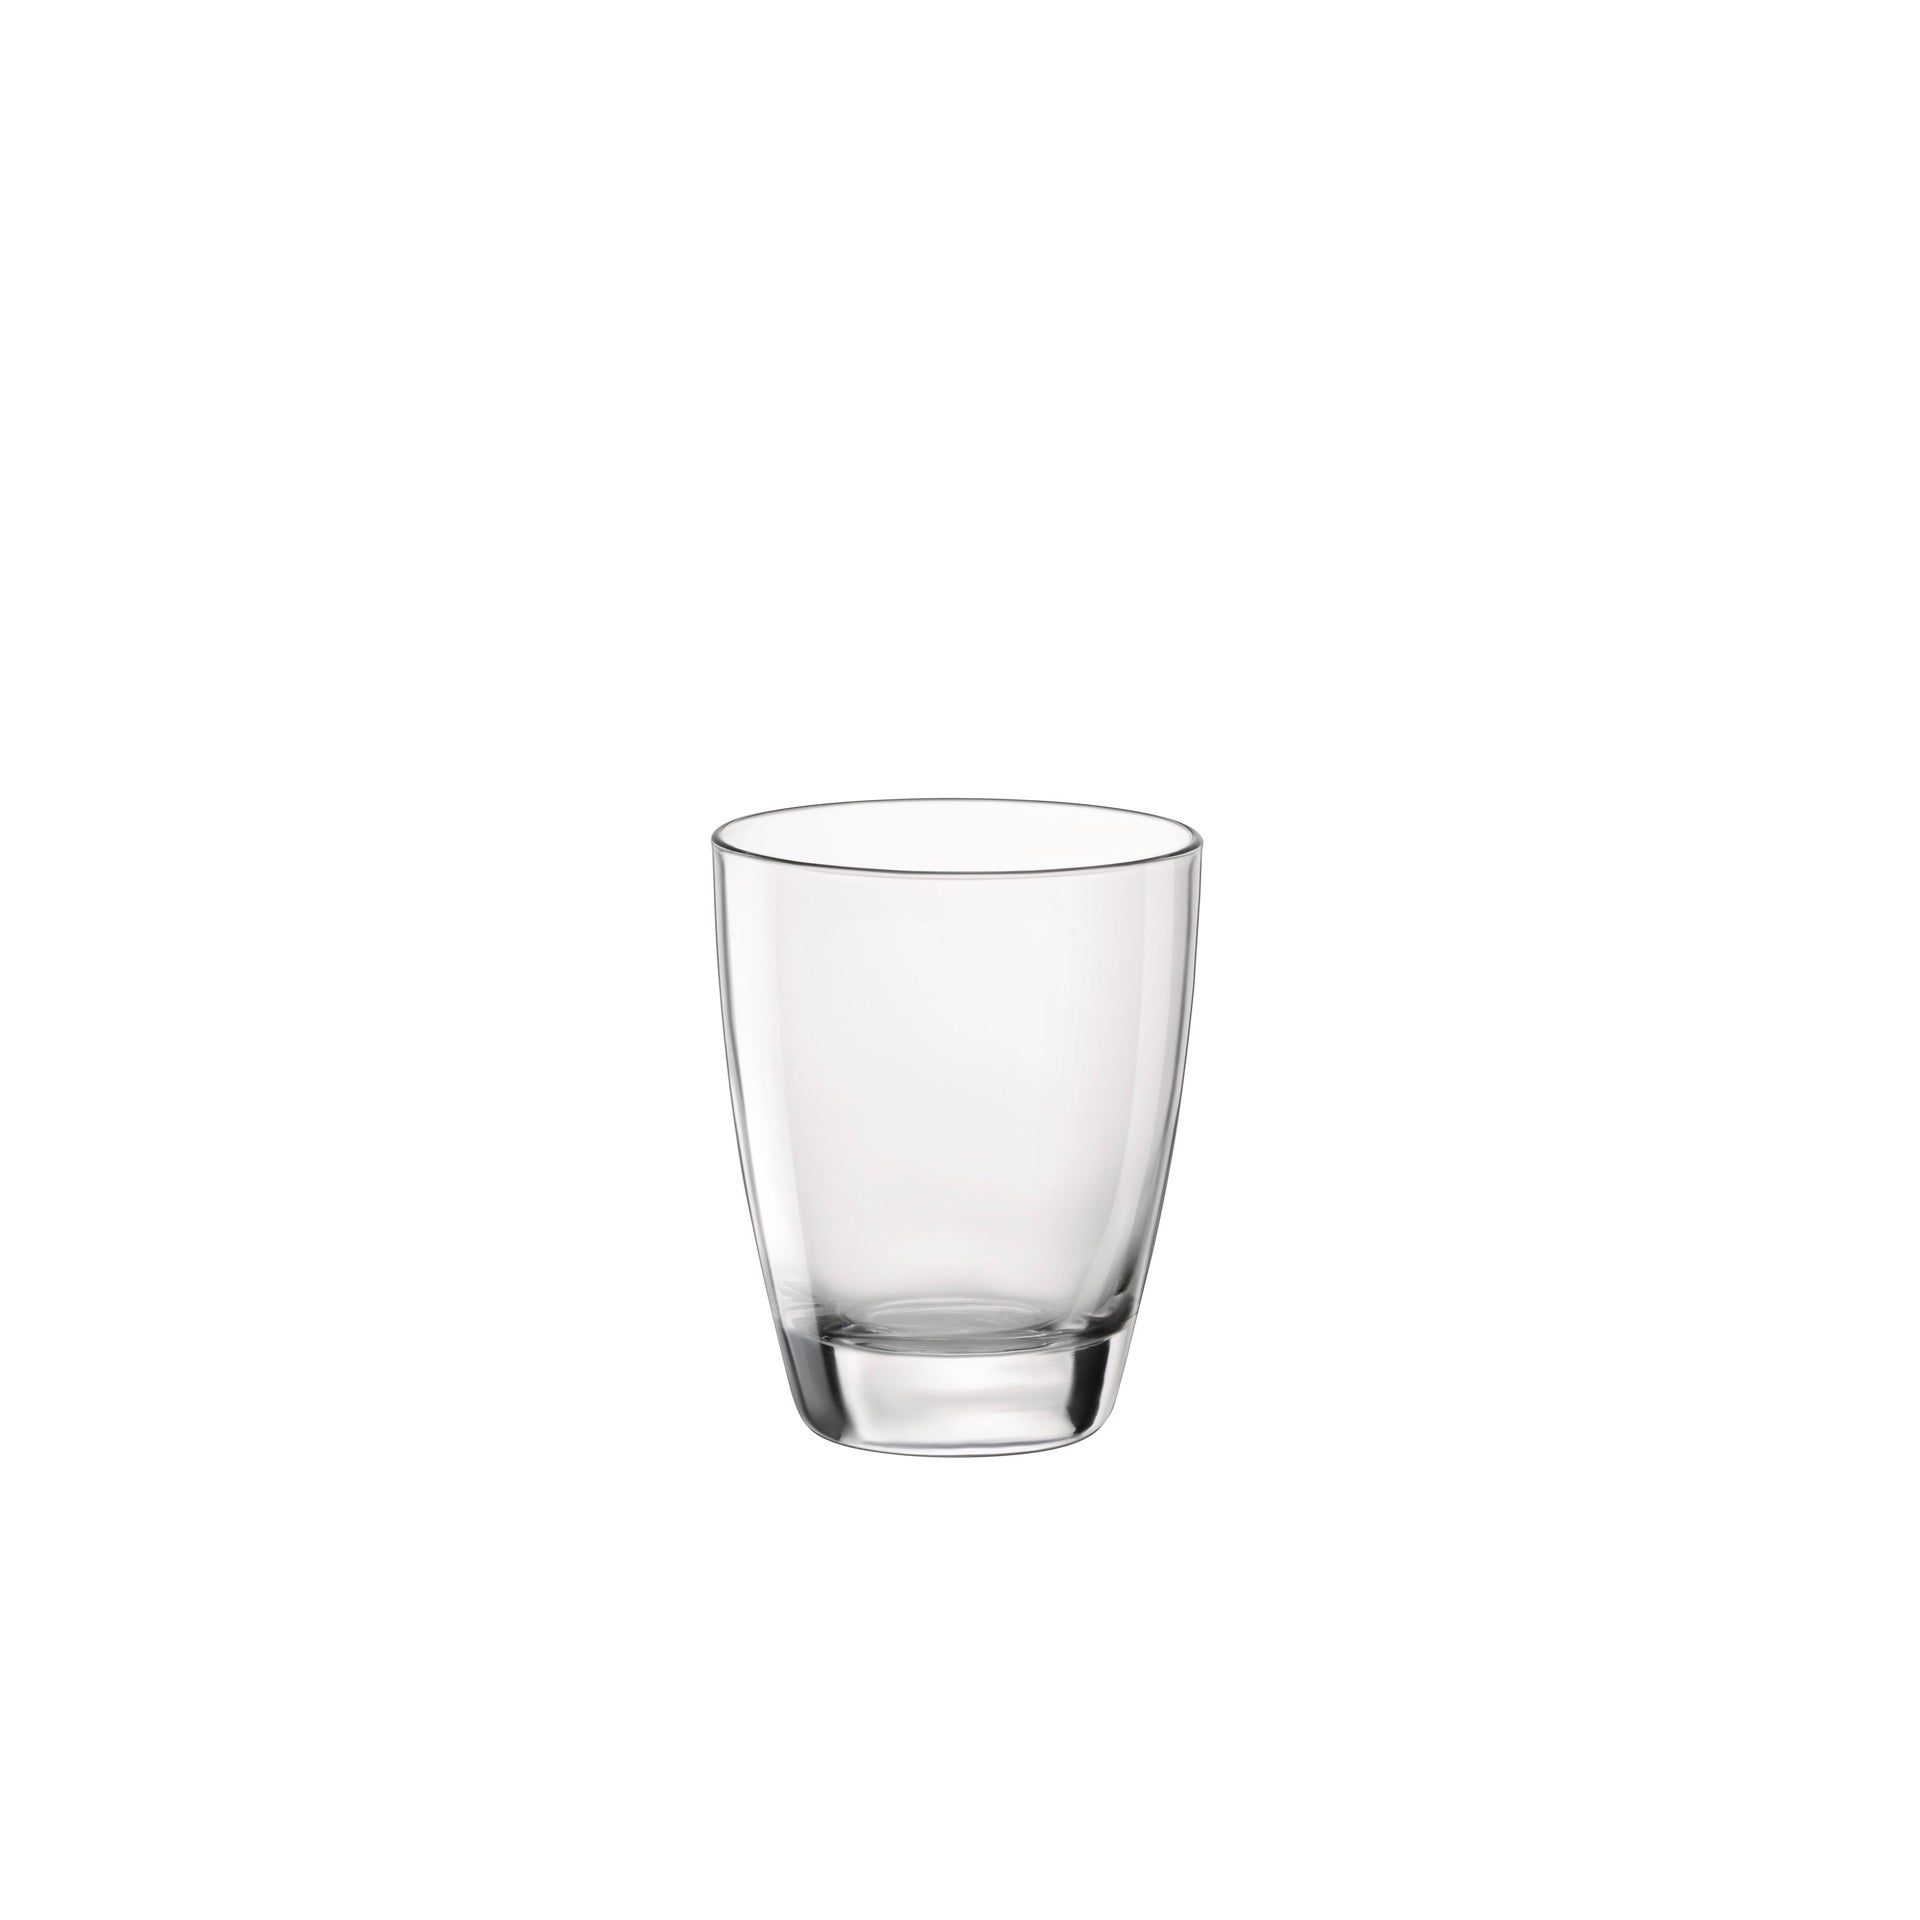 Nadia 12.75 oz. DOF Drinking Glasses (Set of 4)